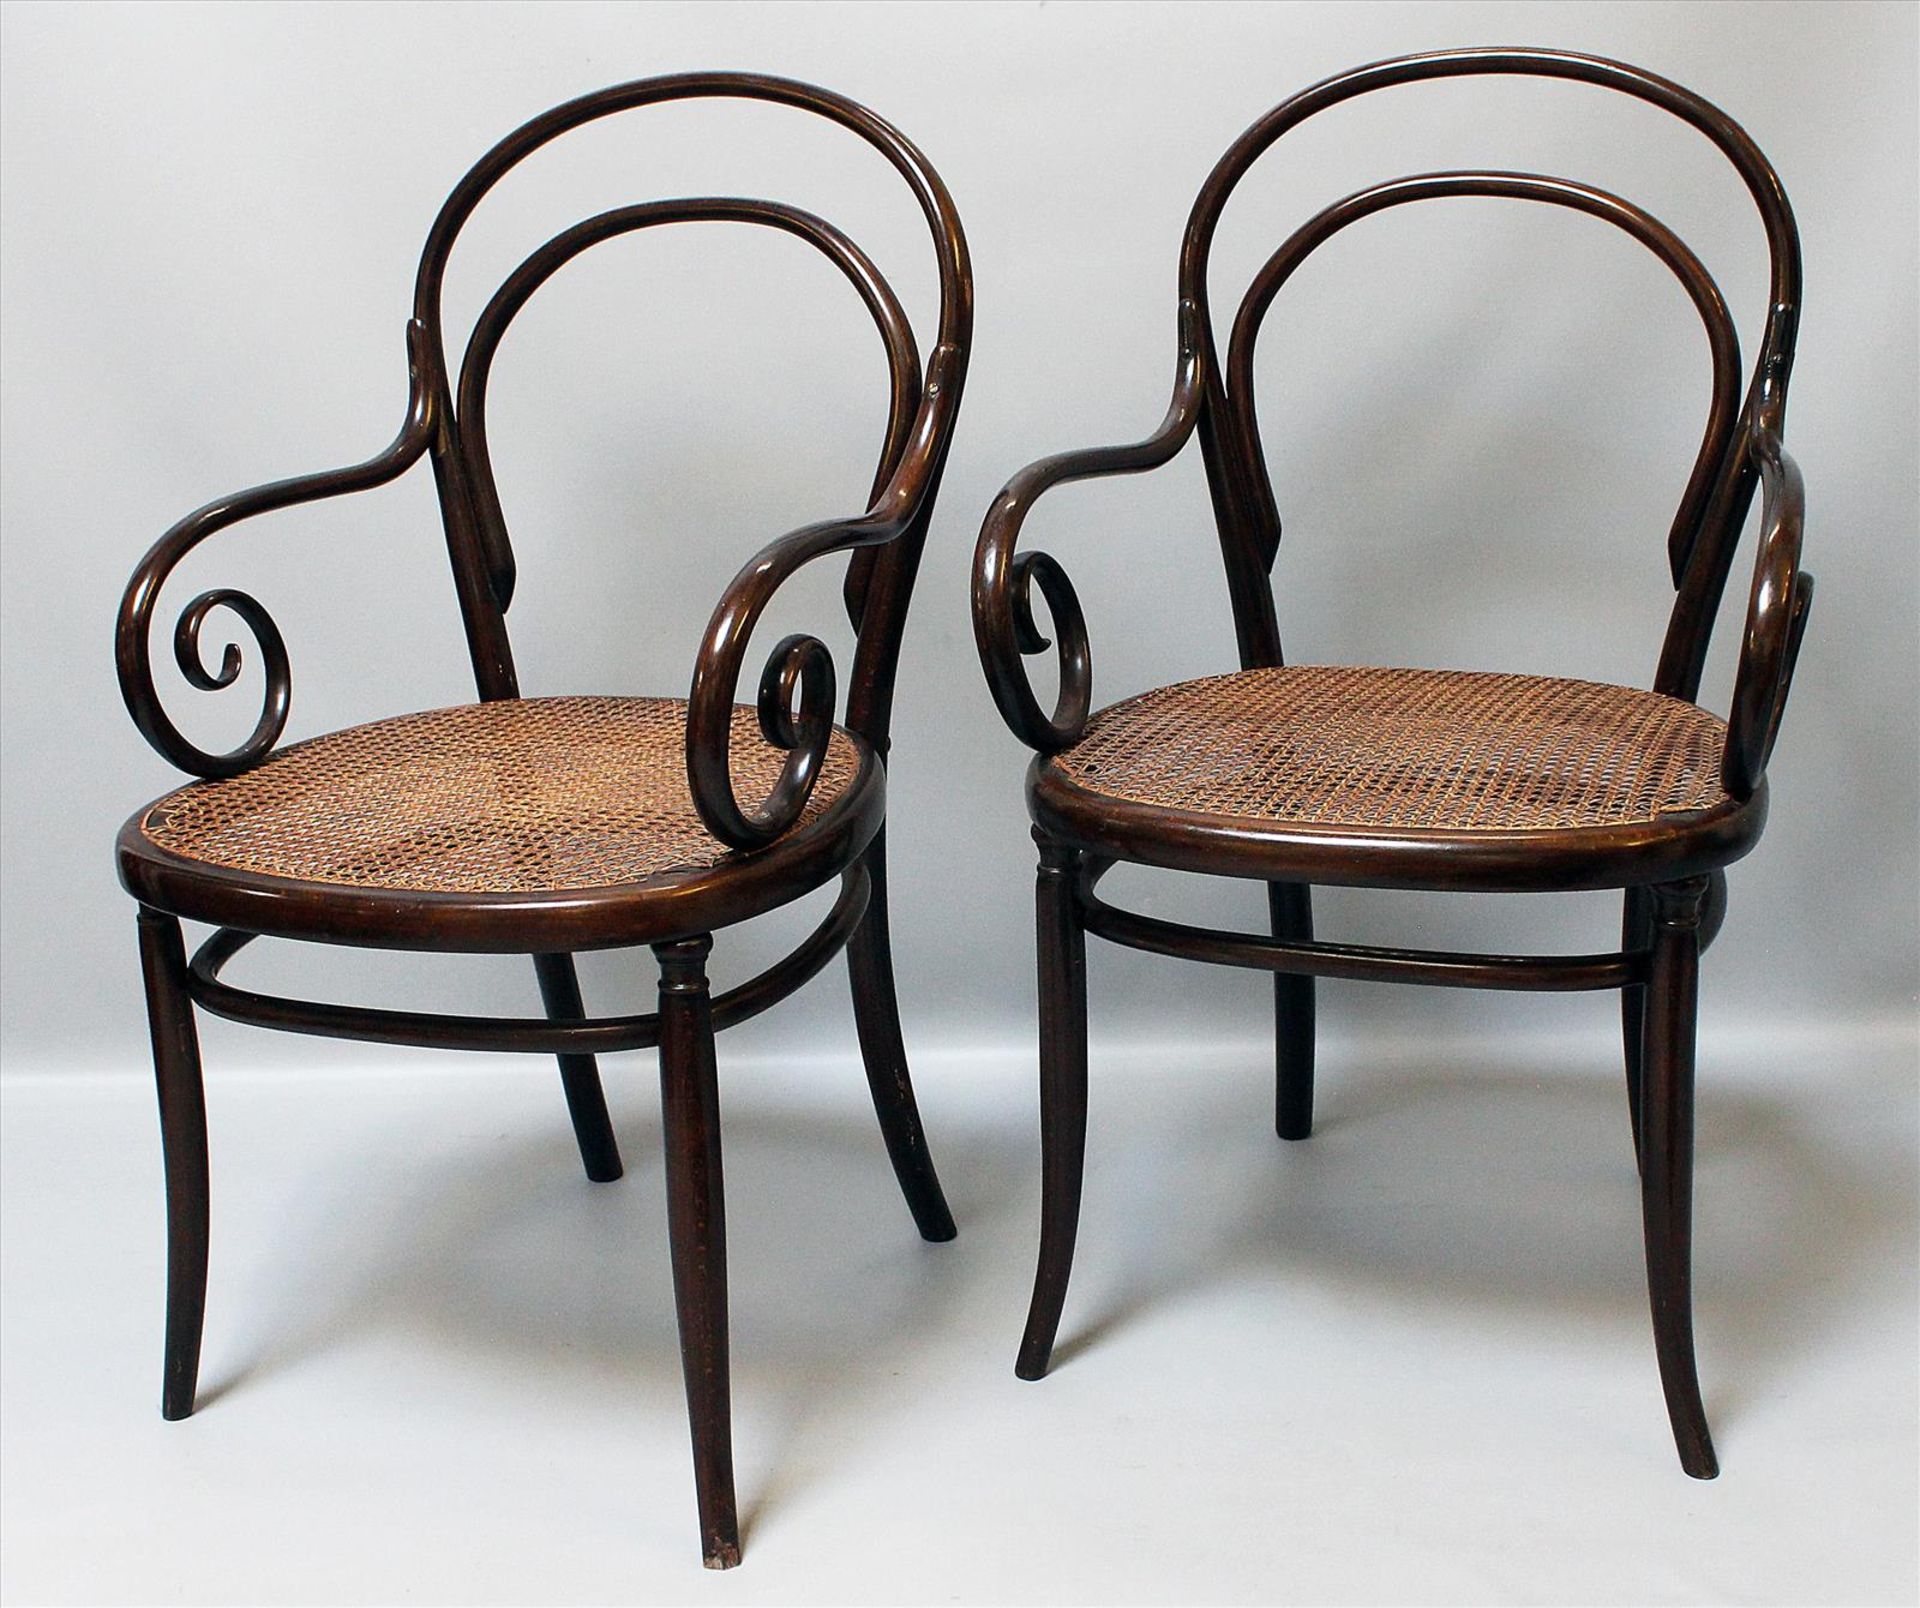 Paar Fauteuils.Bugholz. Sitz mit Korbgeflecht. Gebrauchsspuren. Um 1900. H. 95 cm.